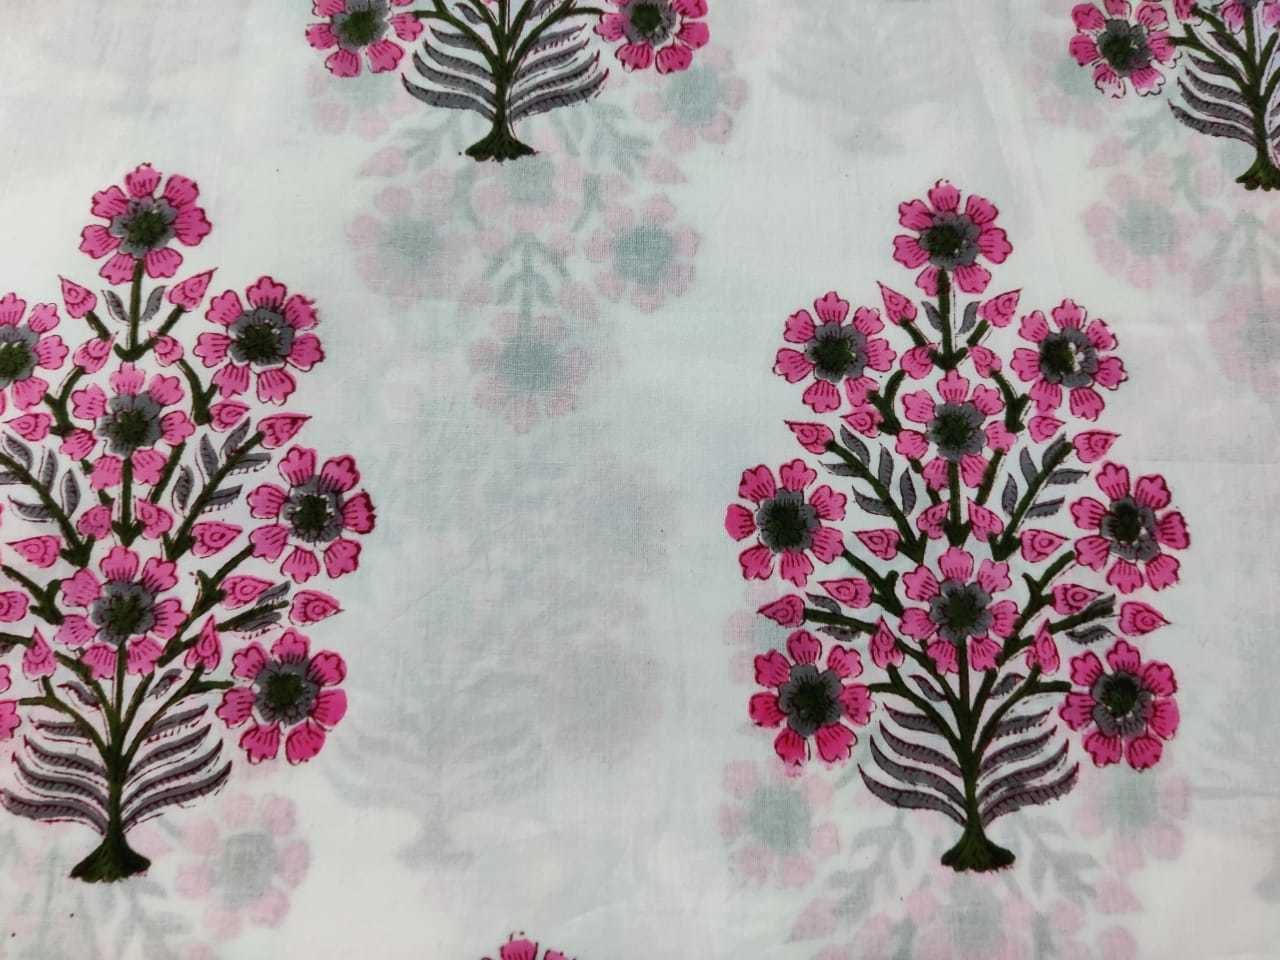 Handmade Mughal Butta Printed Cotton Fabric